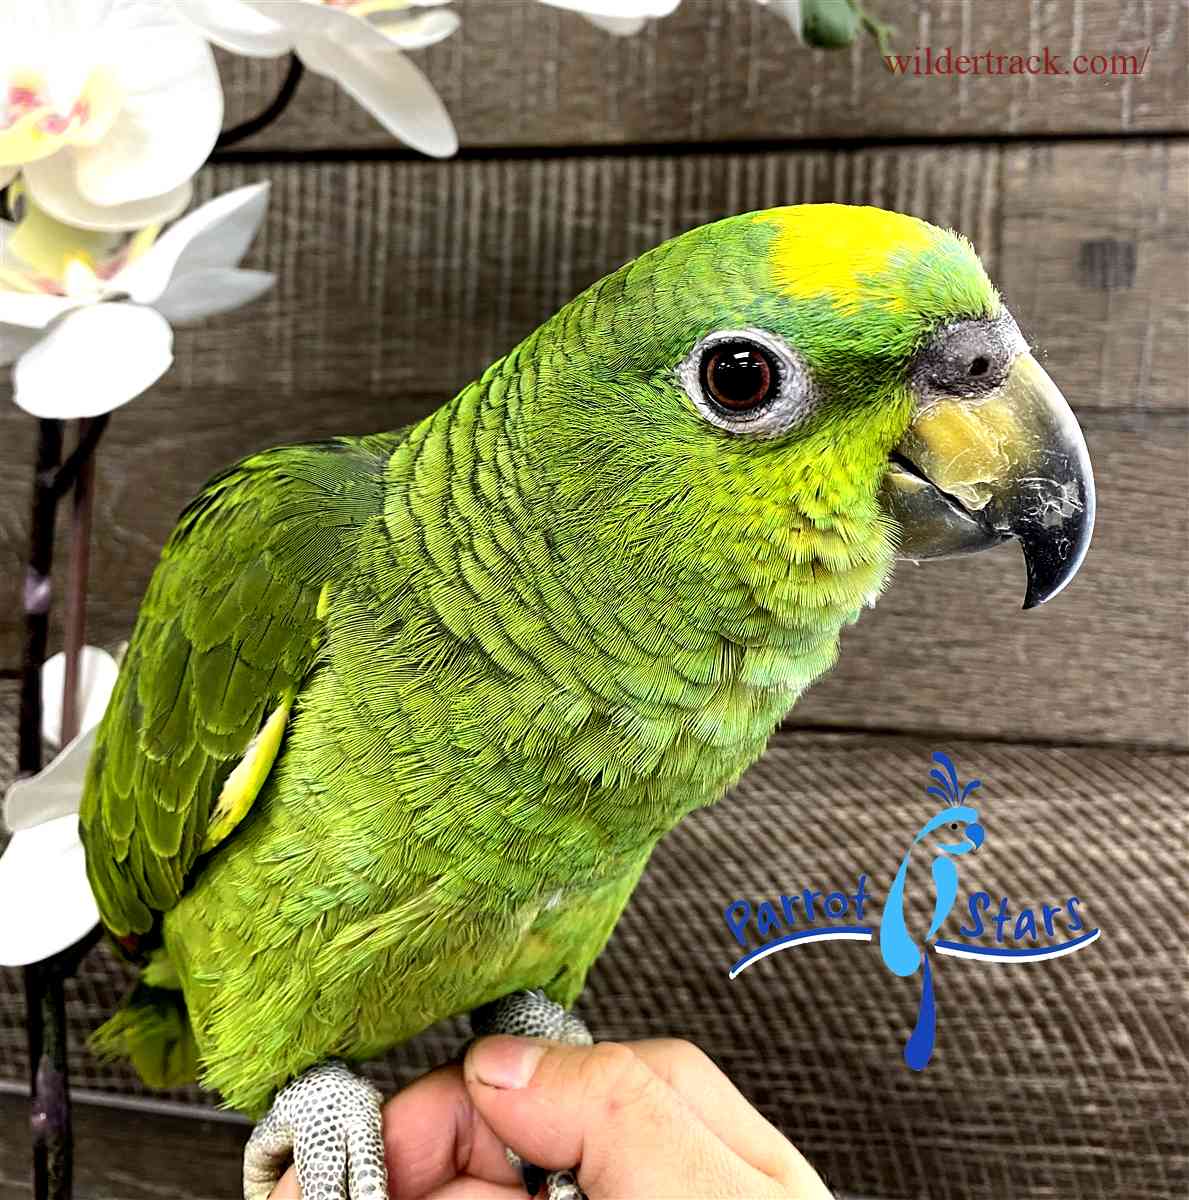 The Amazon Parrot: